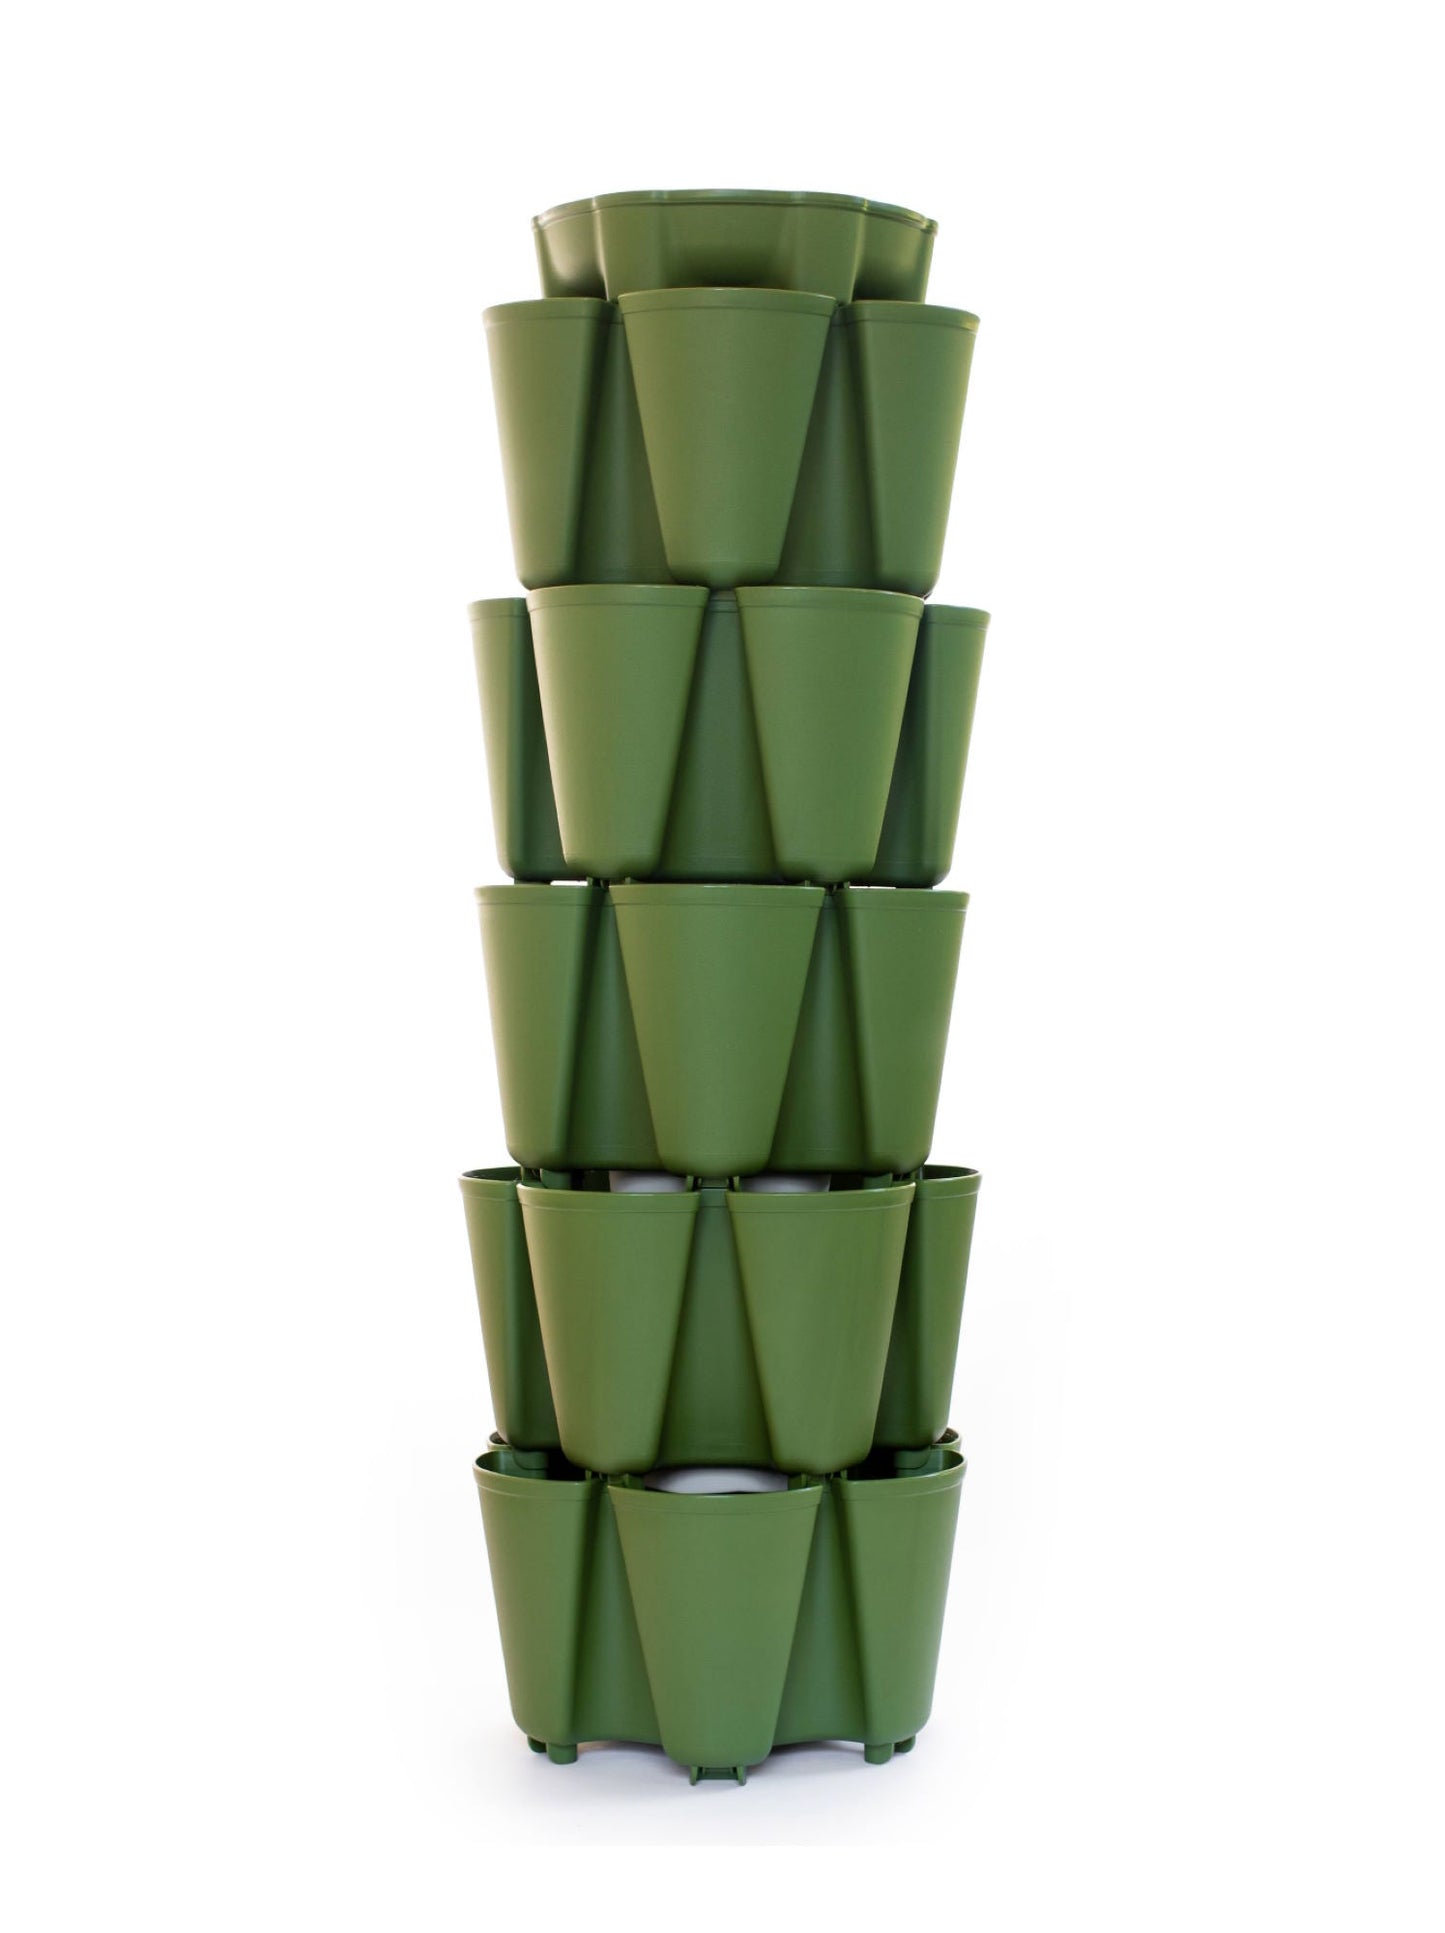 GreenStalk ORIGINAL Vertical Planter - 5 Tier - Evergreen - Vertical urban gardening - Grow Towers